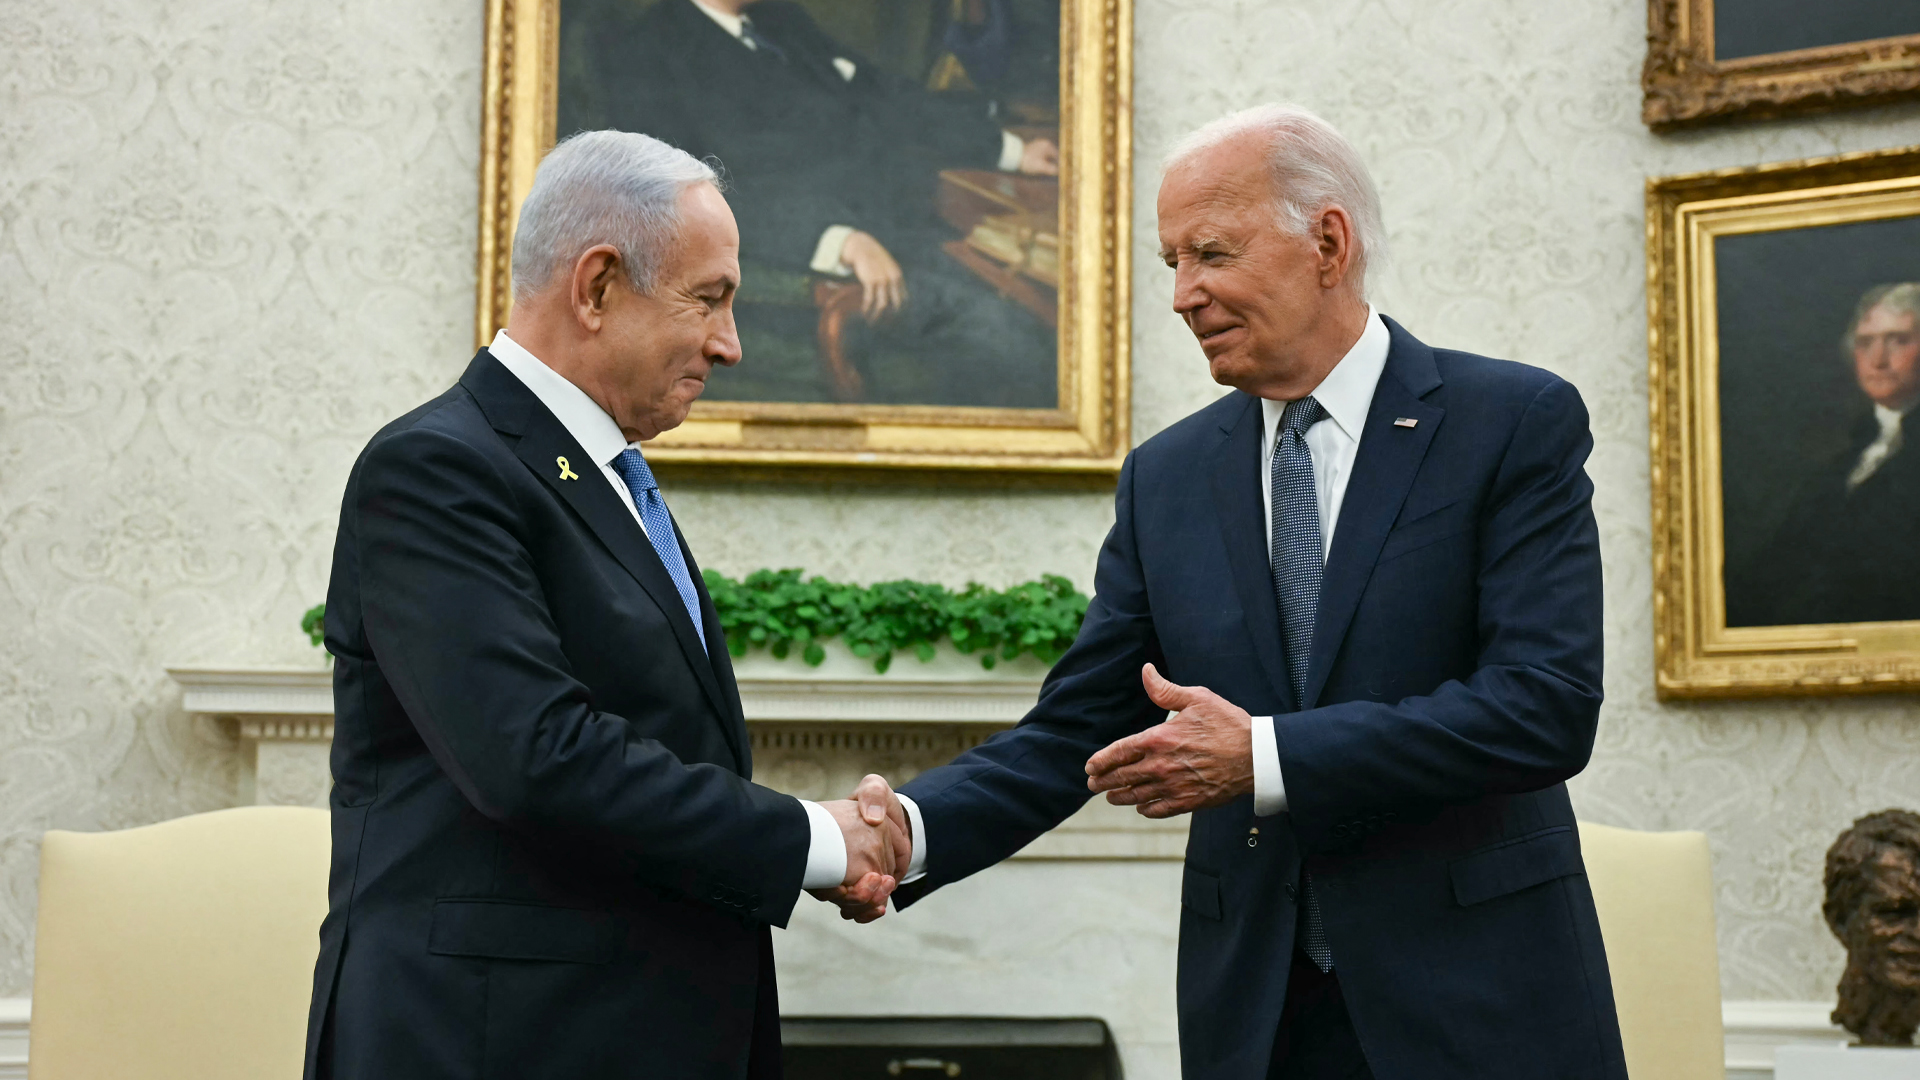 Benjamin Netanyahu meets Joe Biden a day after scorching speech to Congress – as president pushes hard for Gaza truce [Video]